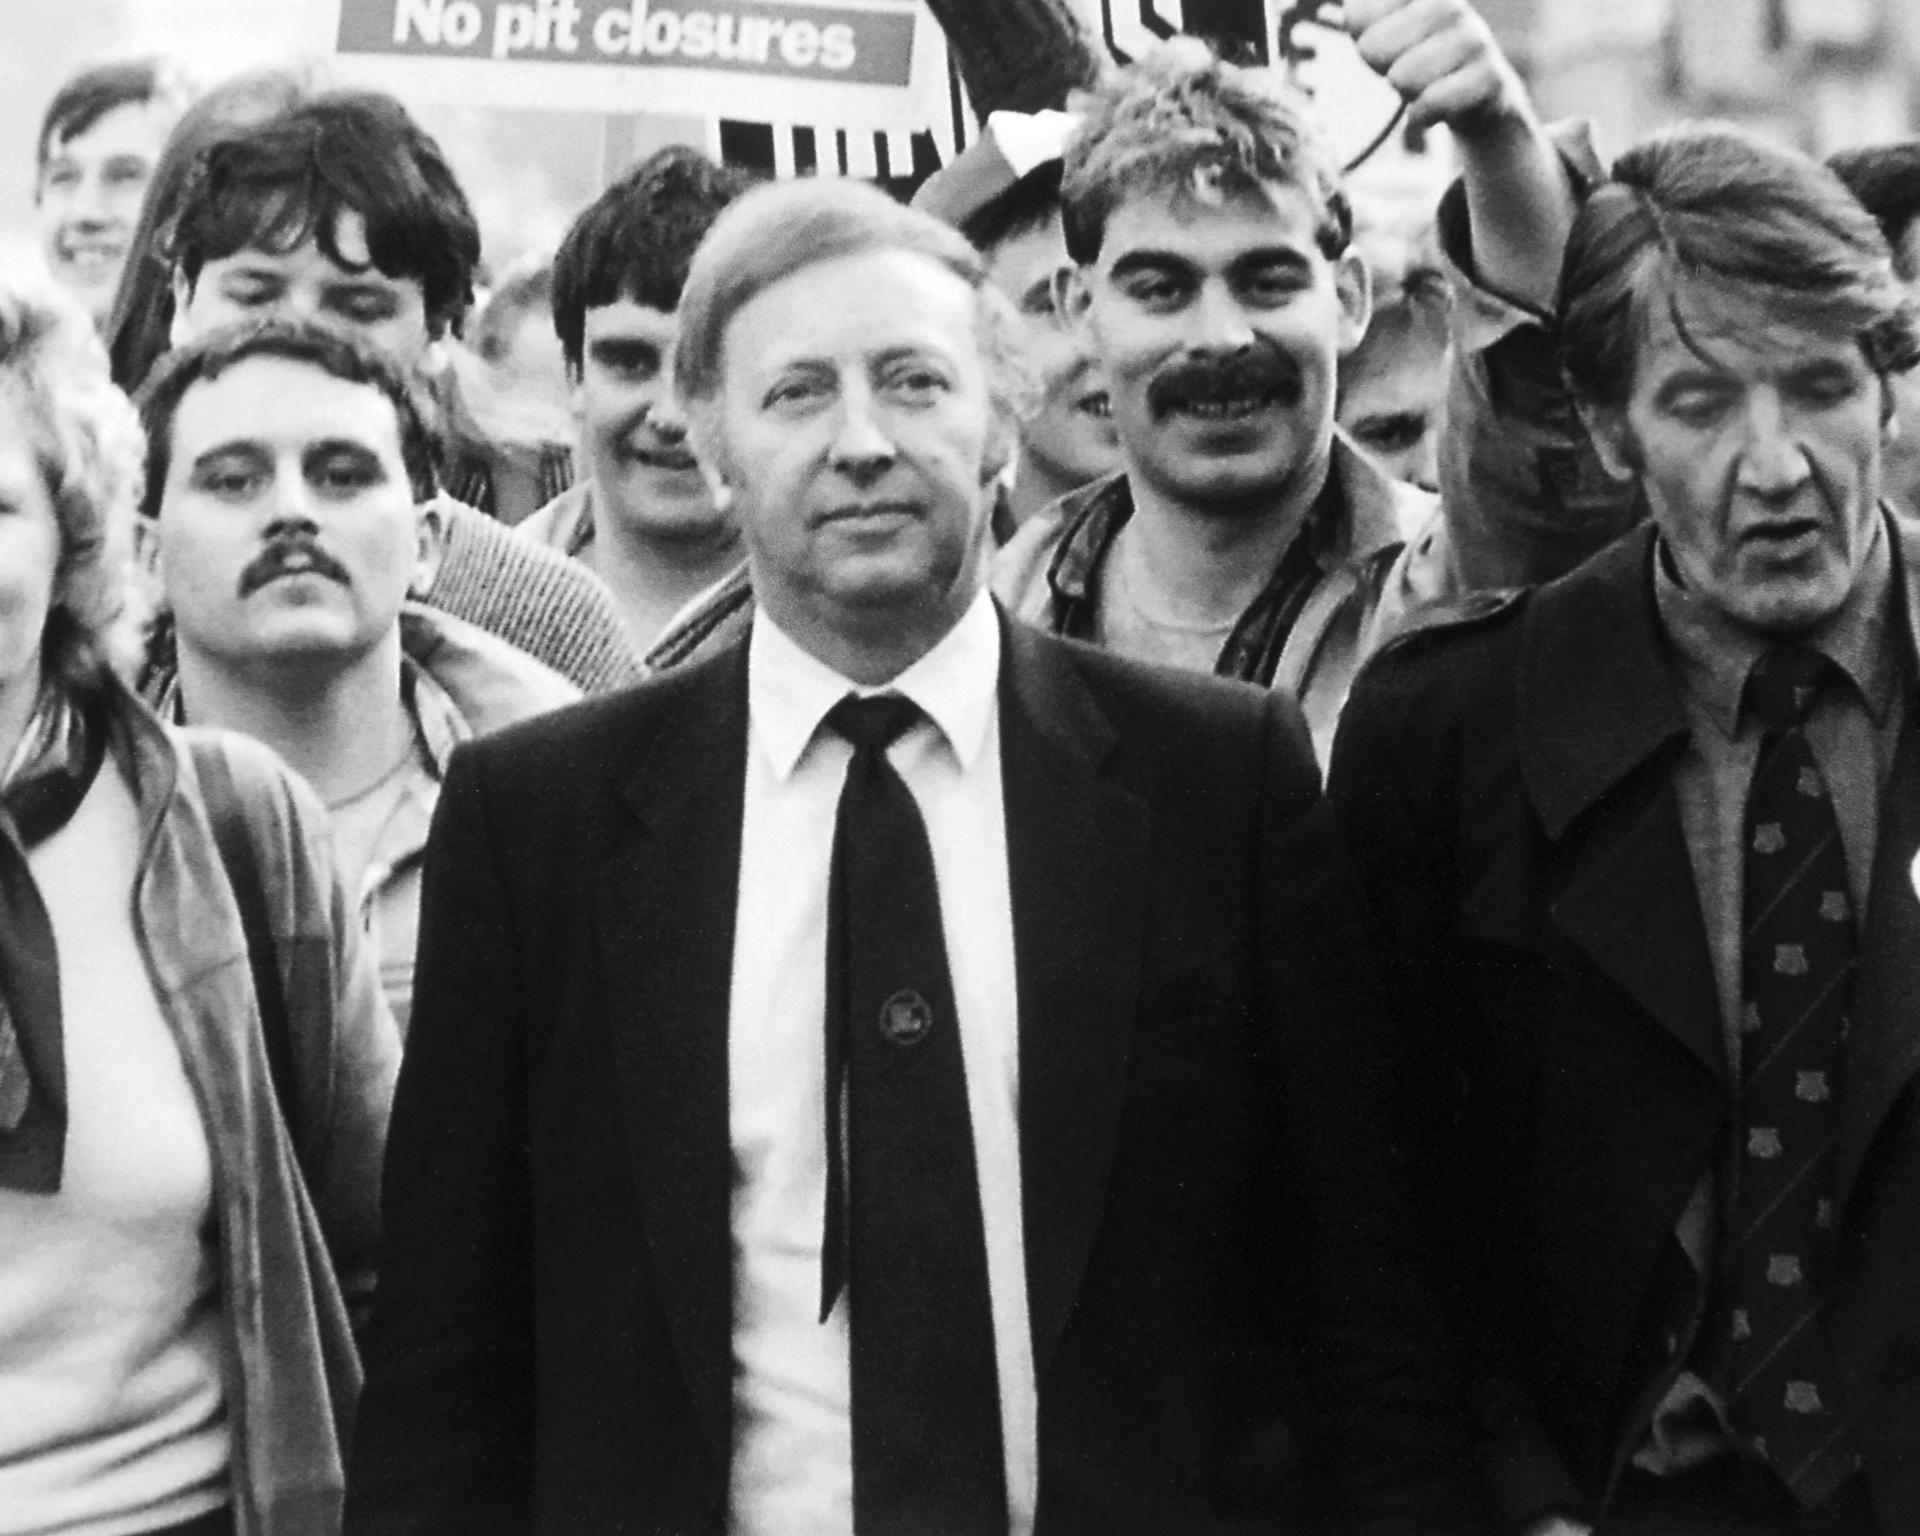 Miners' strike 1984-85, photograph